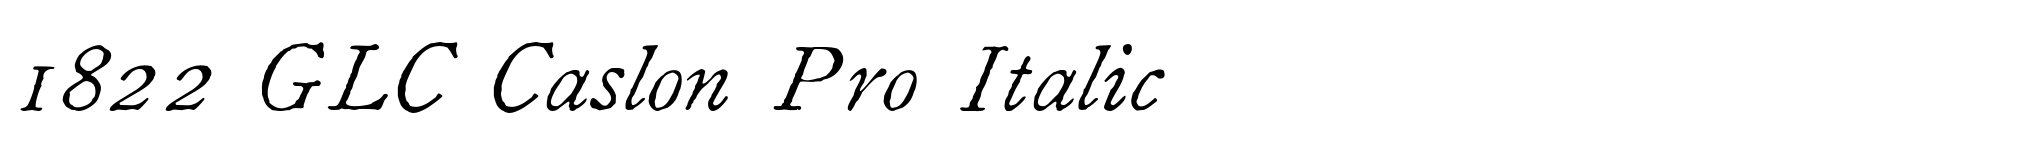 1822 GLC Caslon Pro Italic image